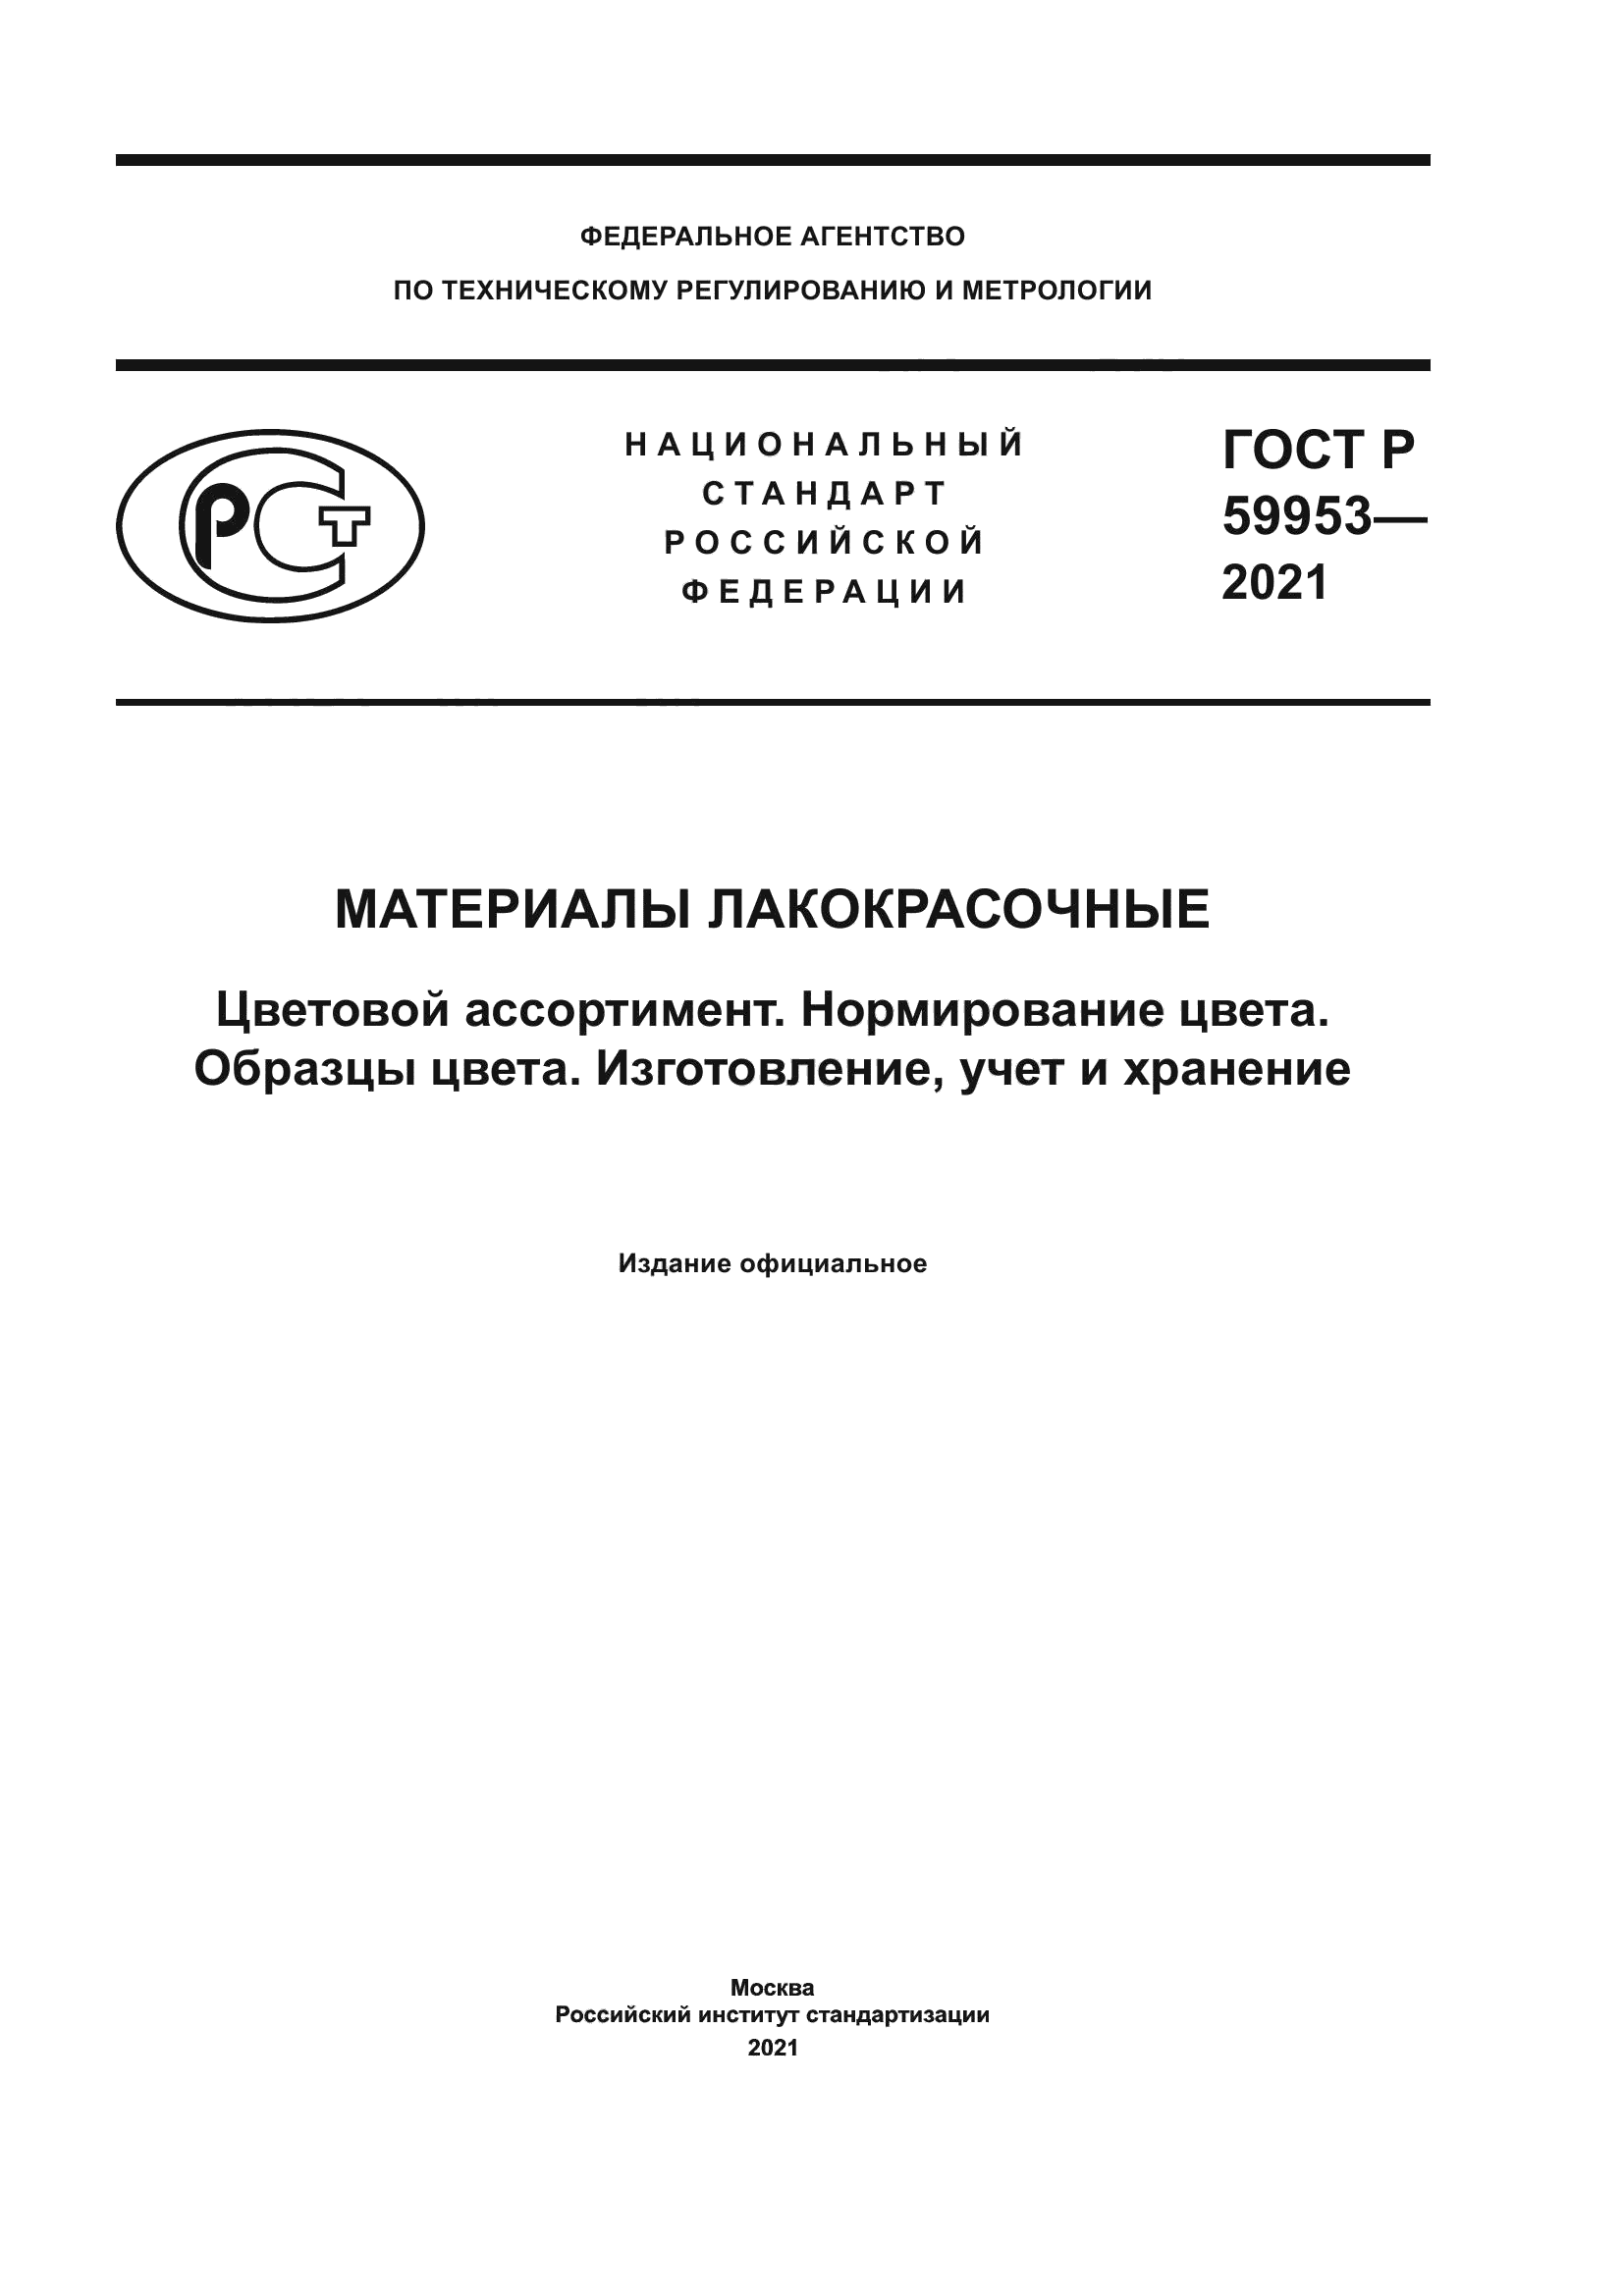 ГОСТ Р 59953-2021